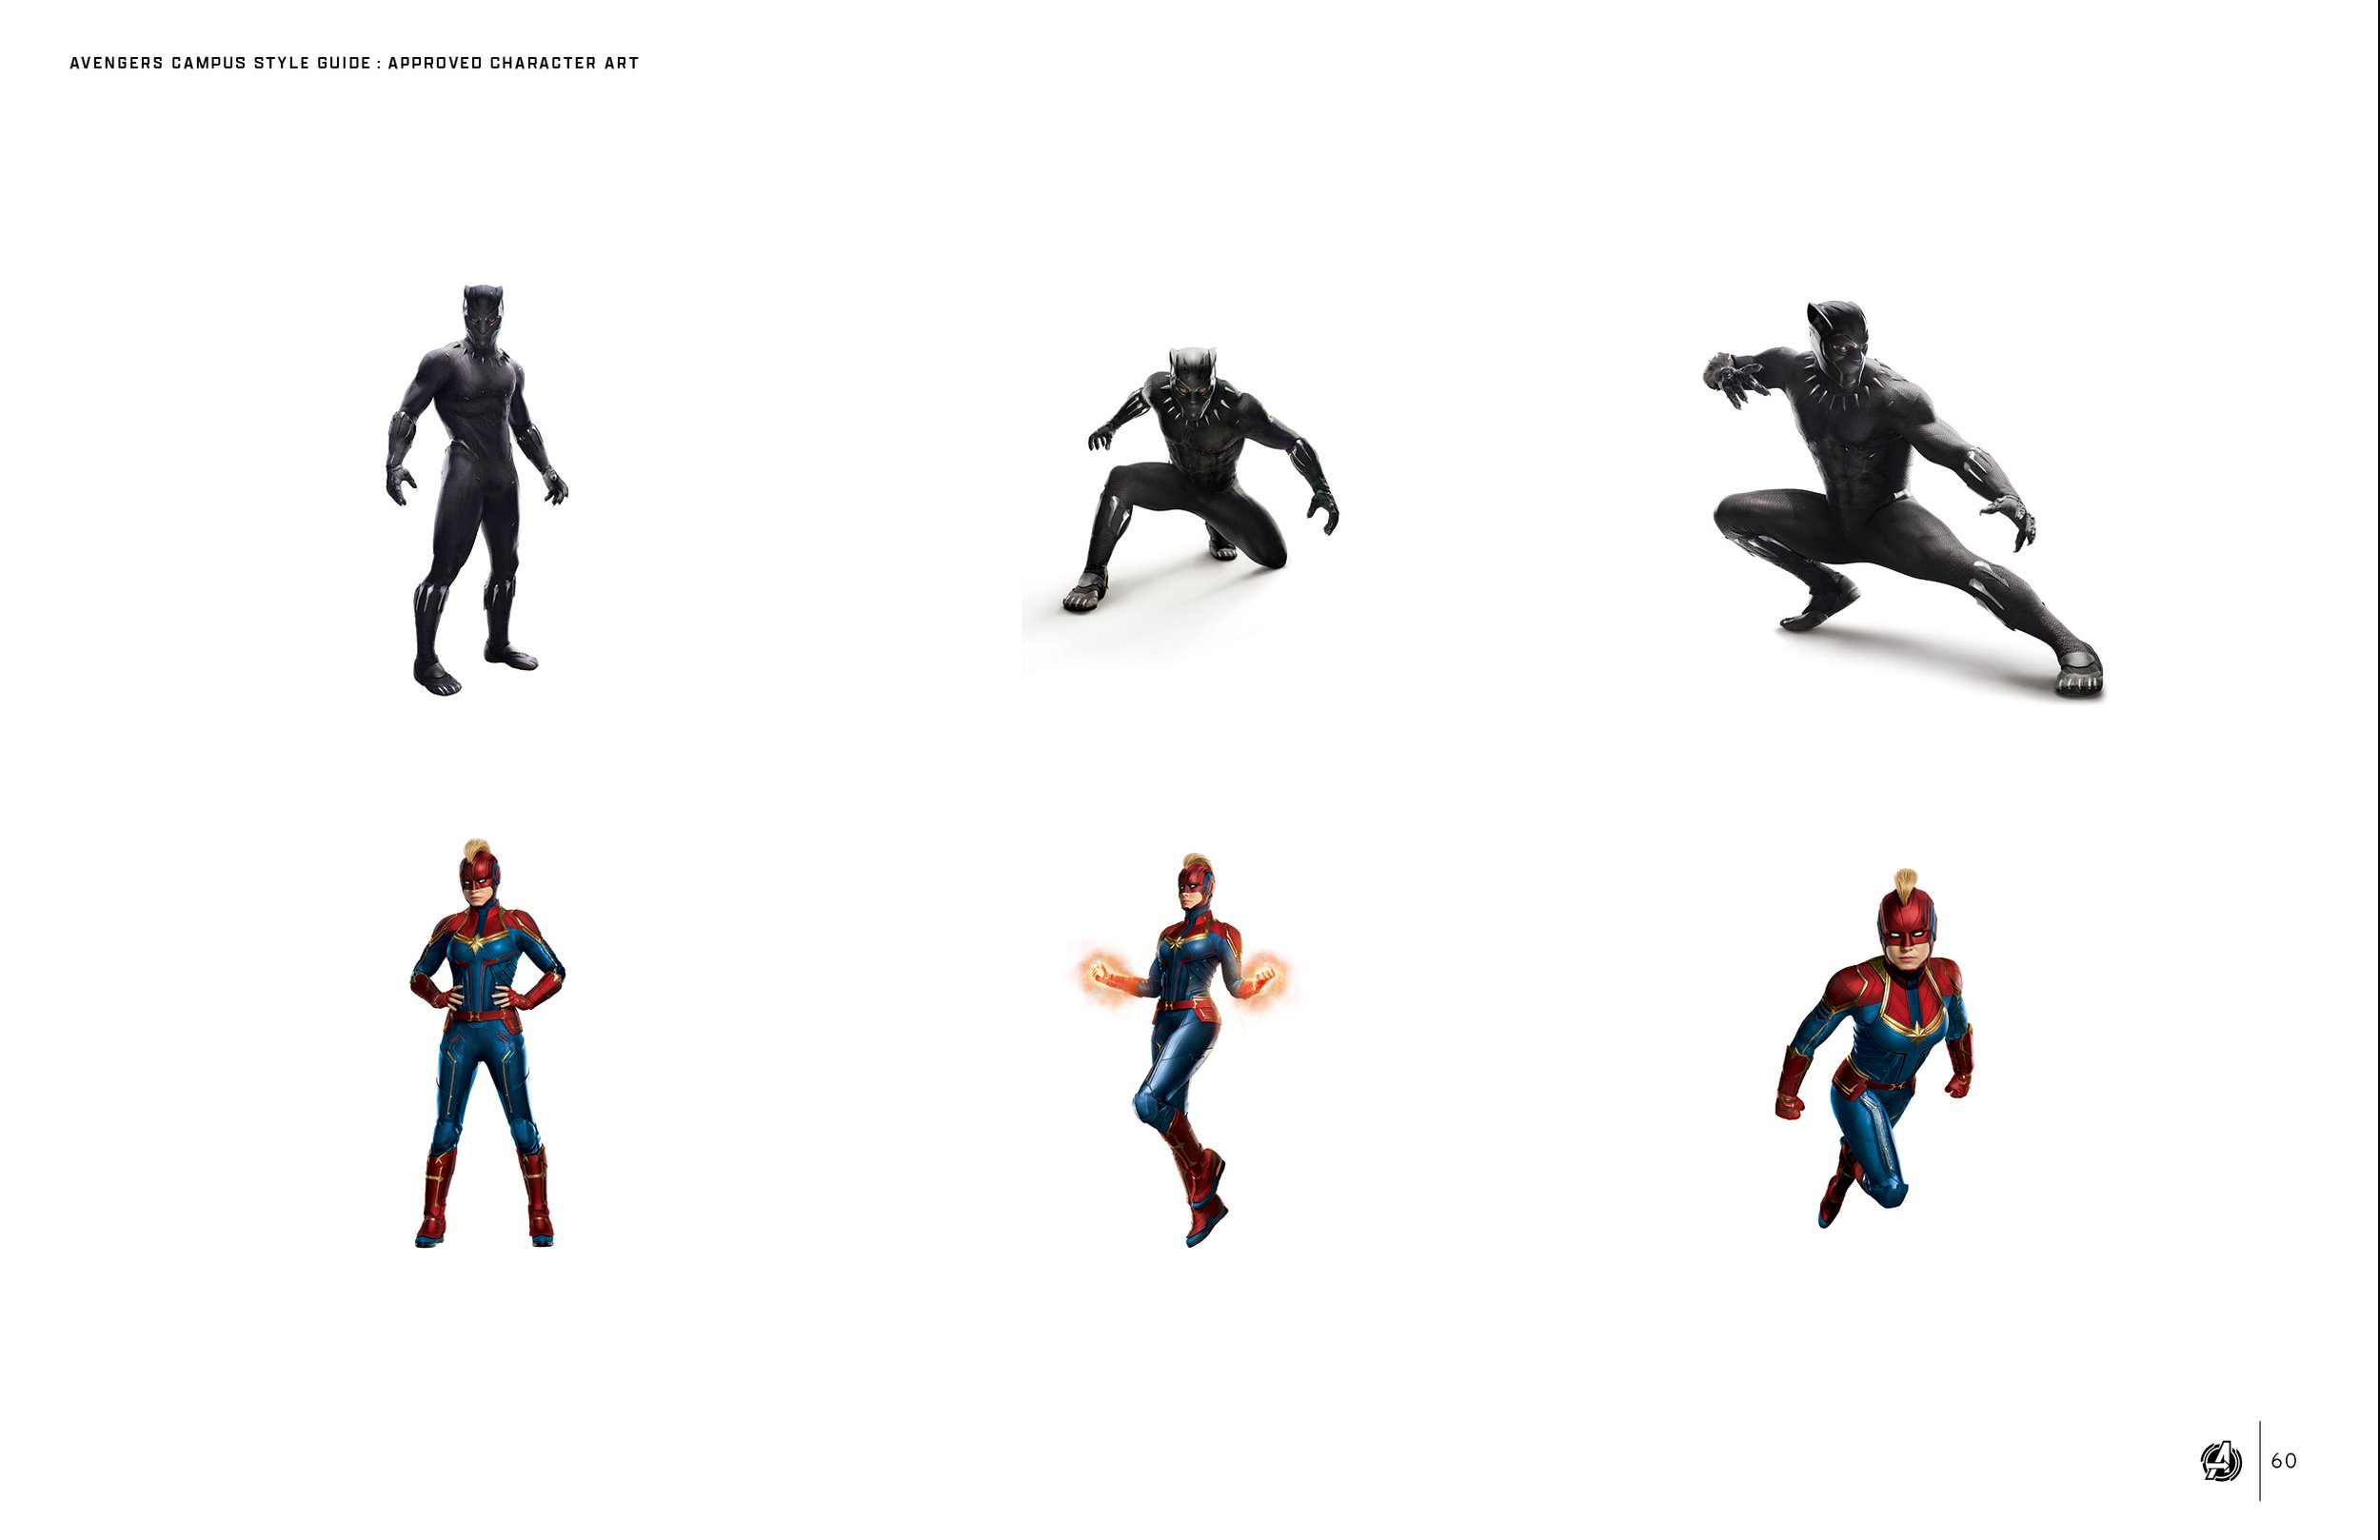 AvengersCampus_StyleGuide_Website_60.jpg